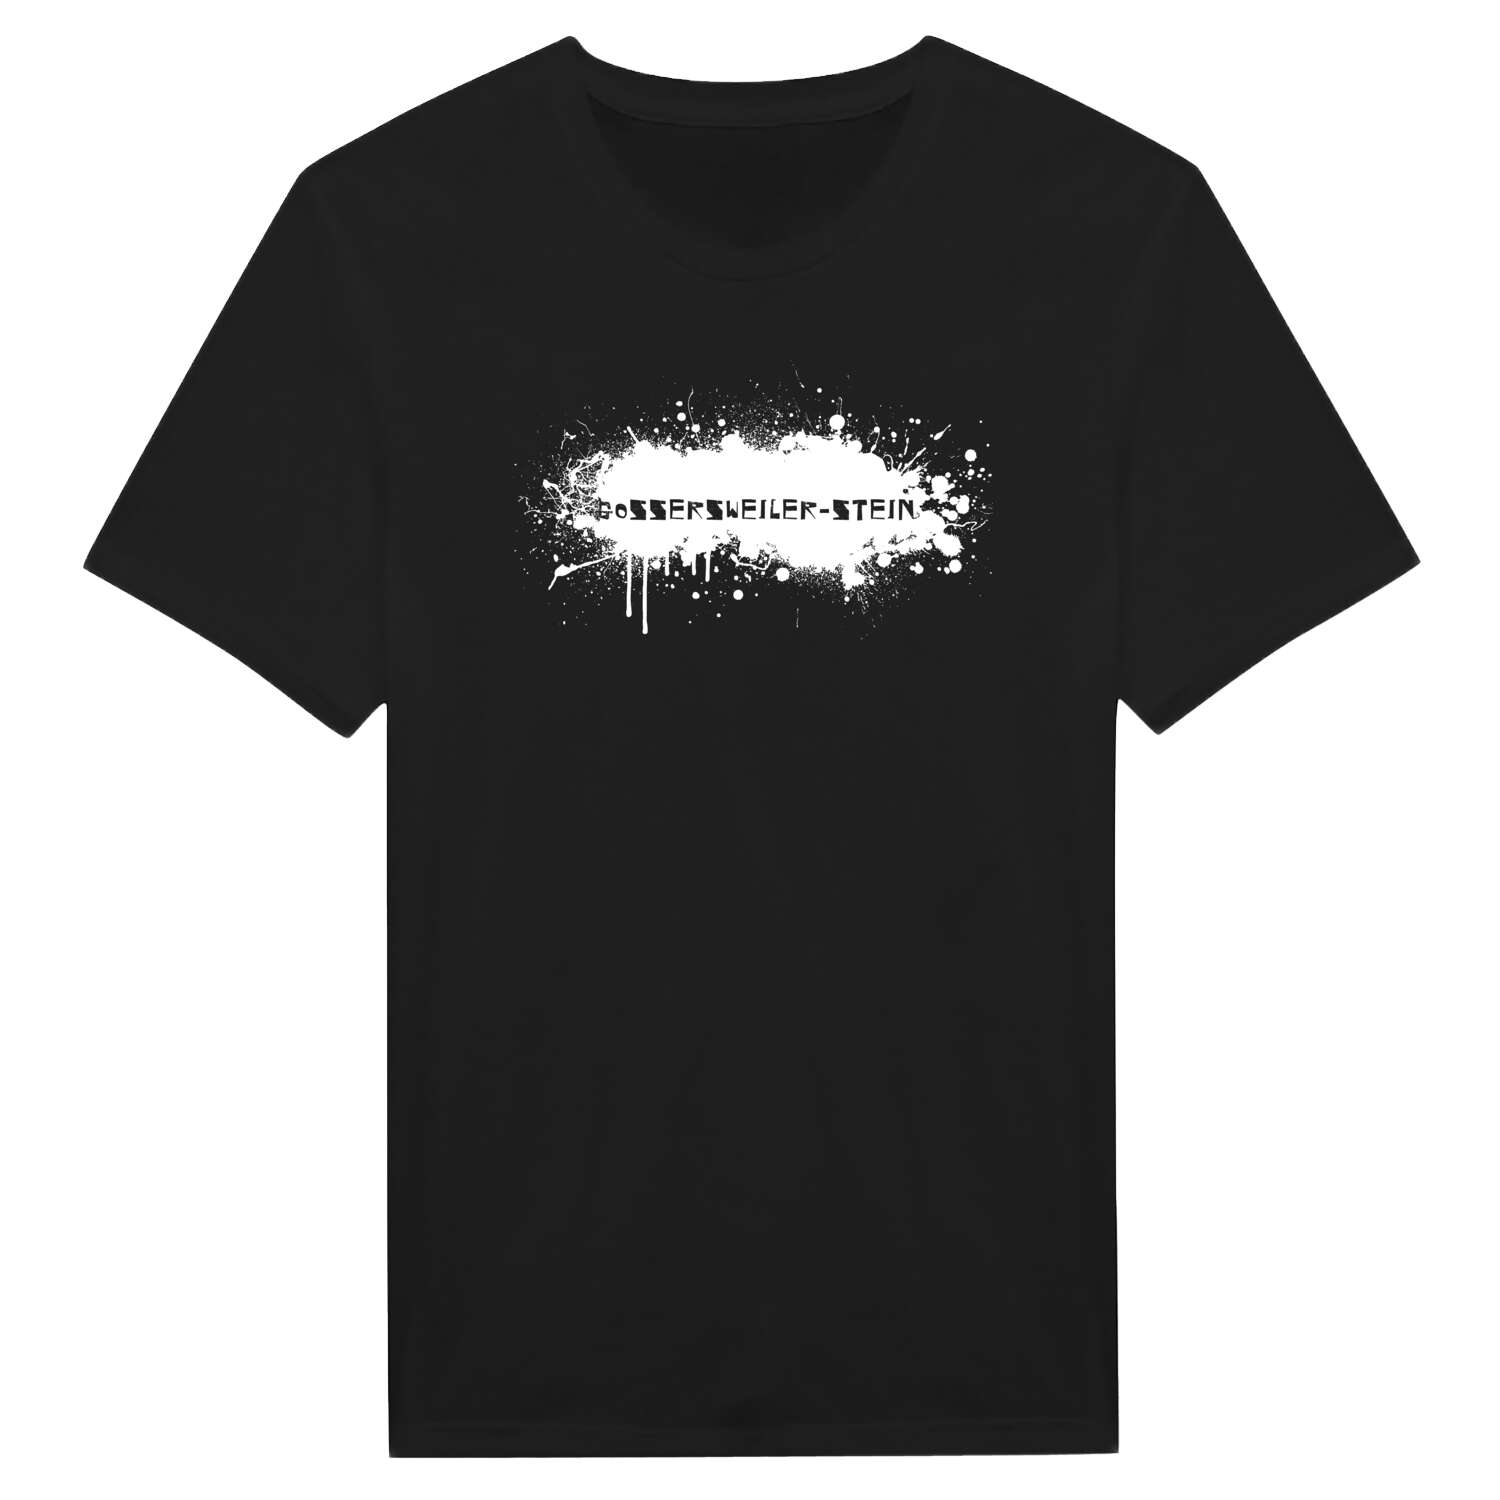 Gossersweiler-Stein T-Shirt »Paint Splash Punk«